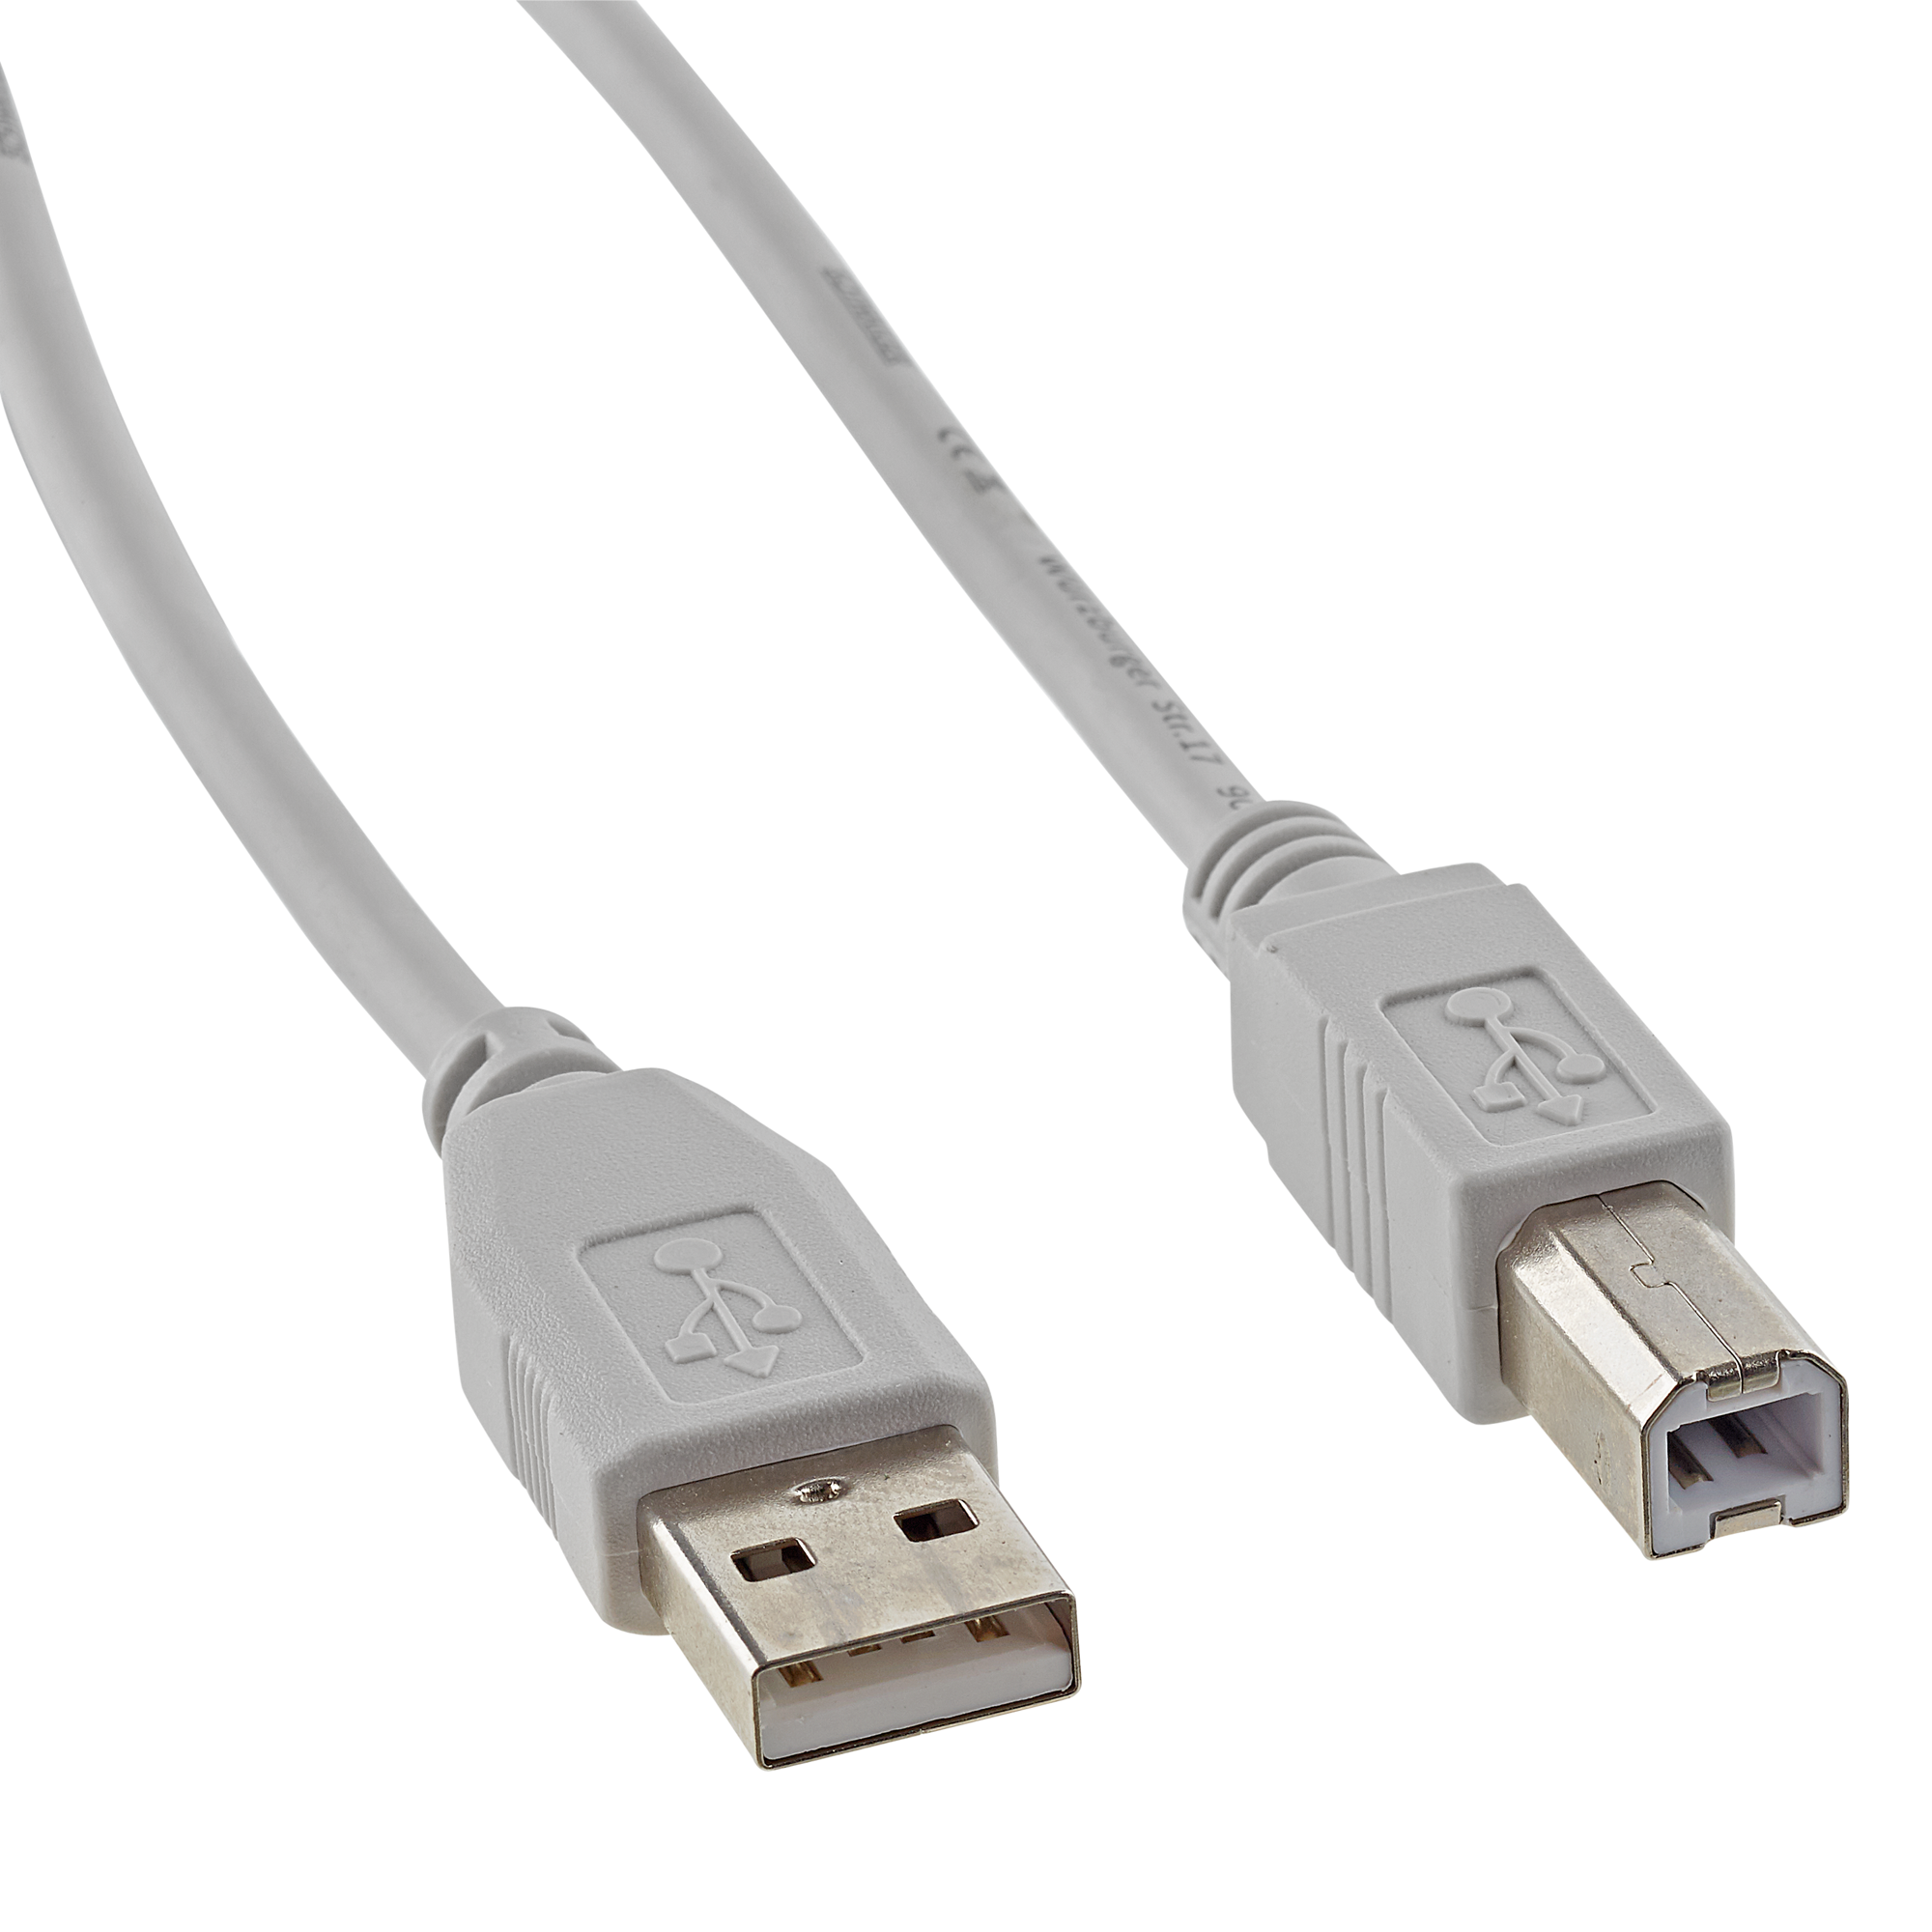 USB 2.0 Anschlusskabel B-Stecker/A-Stecker grau 3 m + product picture